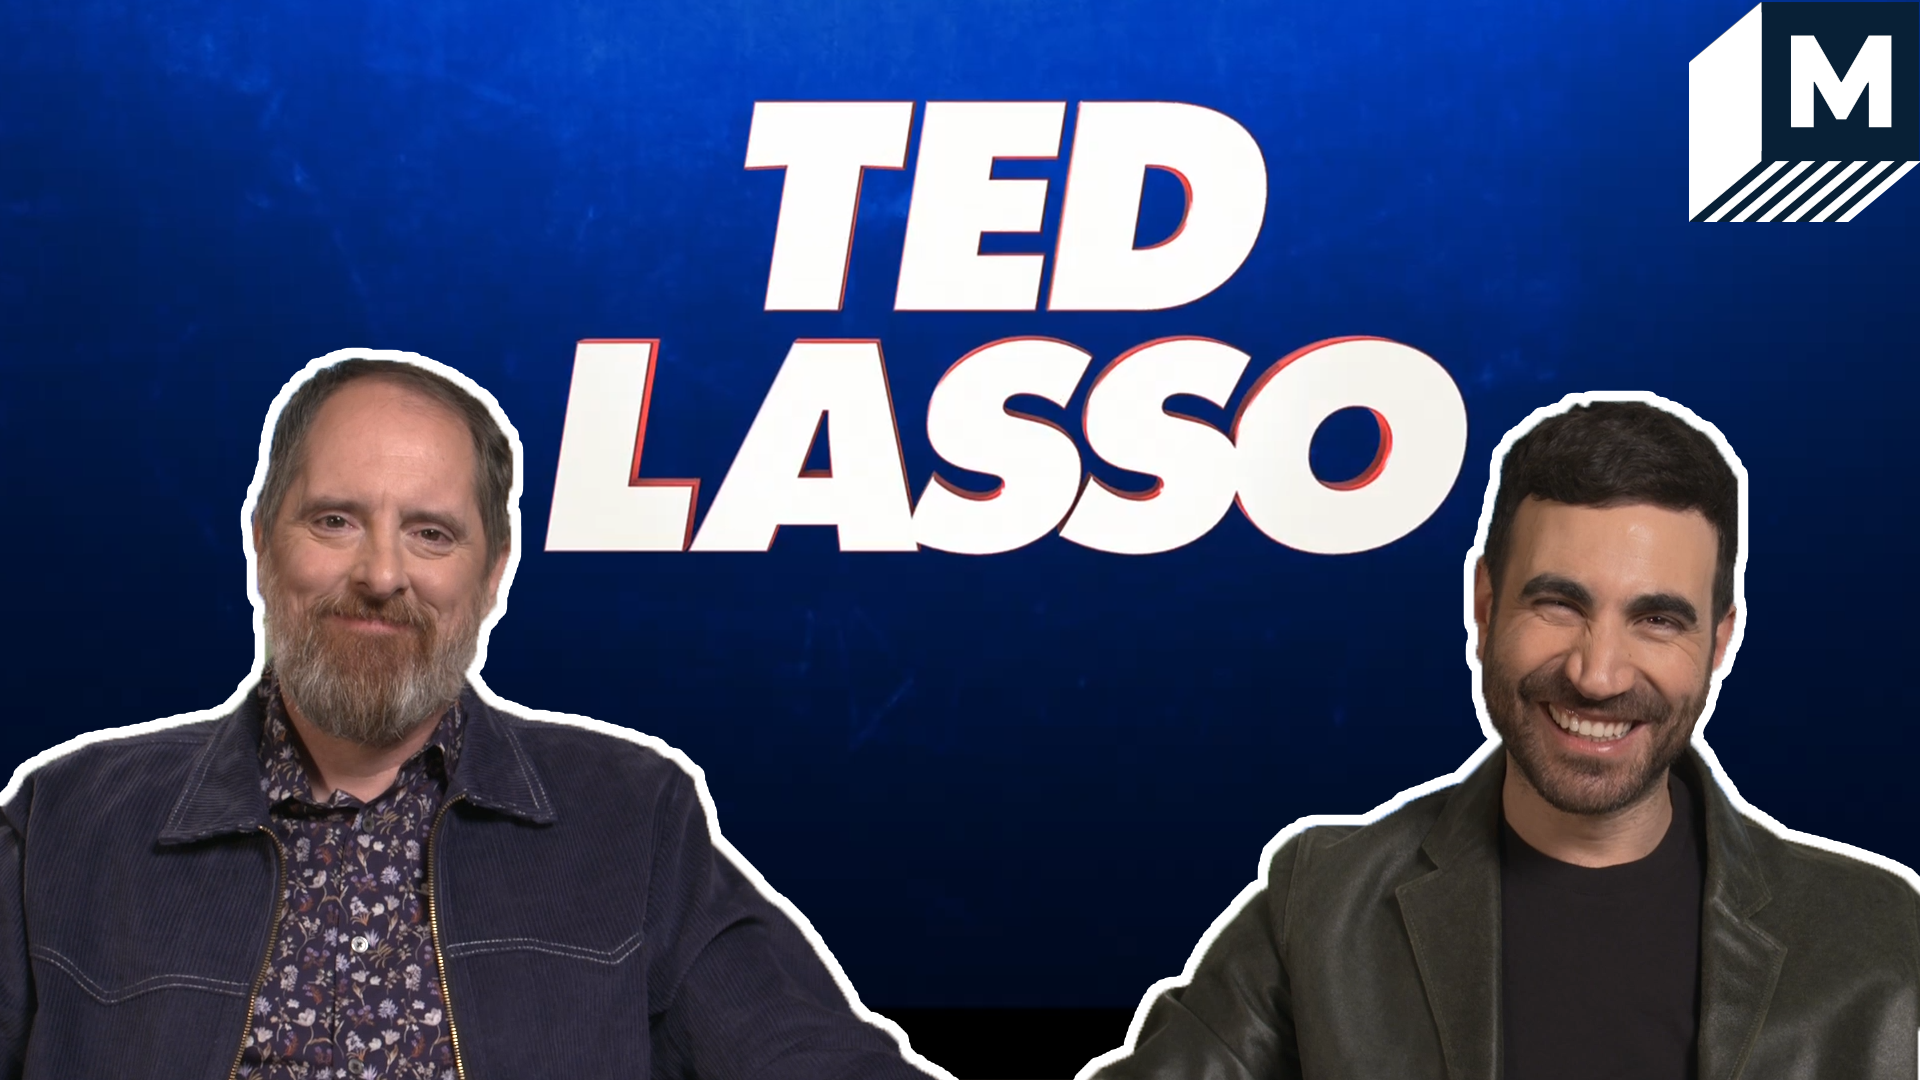 Ted Lasso Season 3